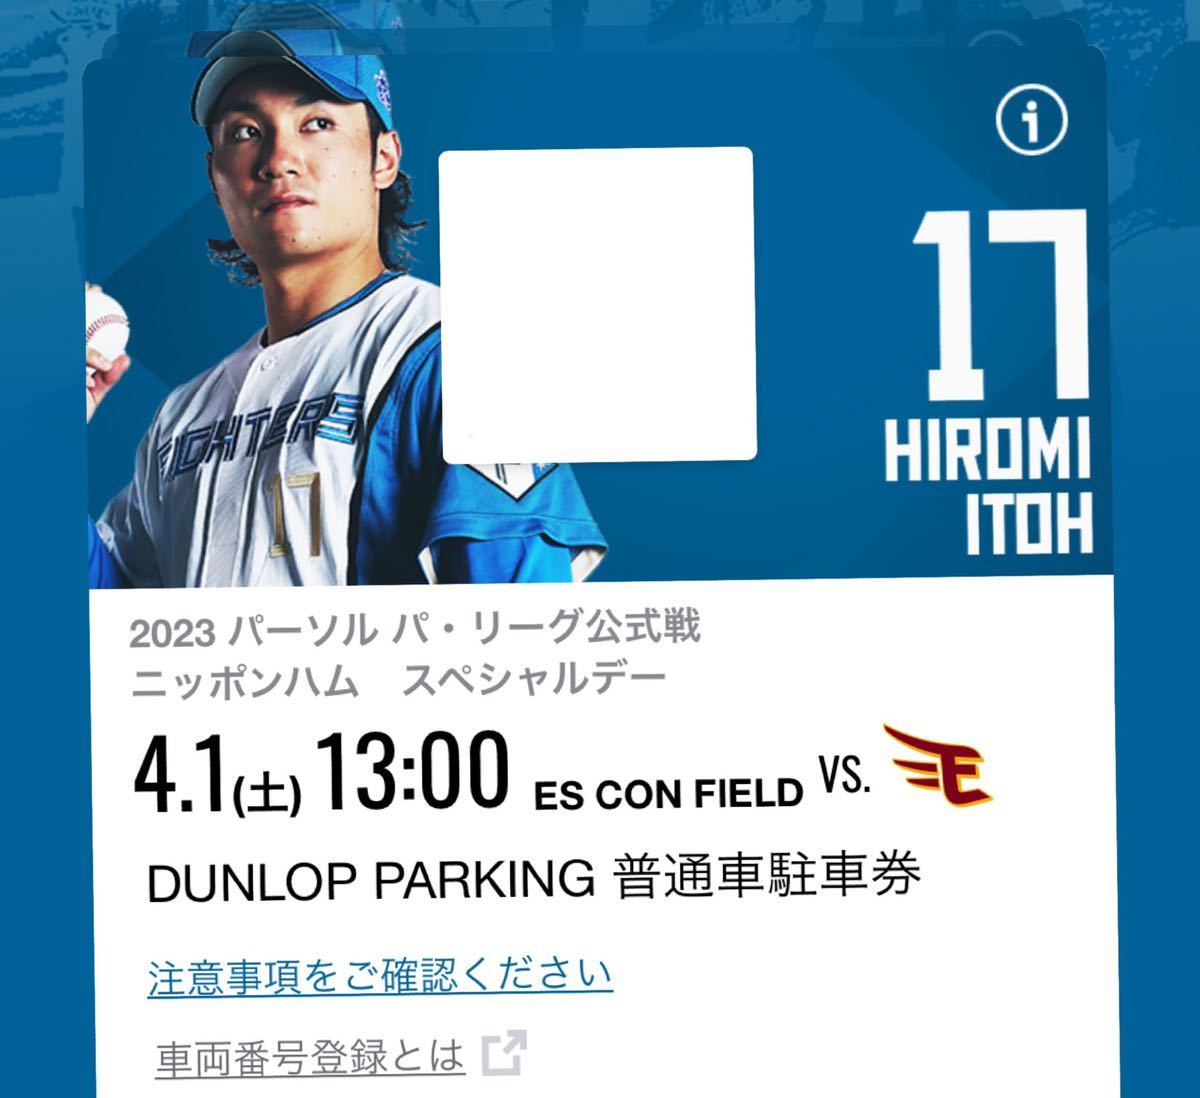 4 месяц 1 день начало no. 2 битва Hokkaido Nippon-Ham Fighters es темно синий поле Hokkaido DUNLOP парковка стандартный машина парковка талон 